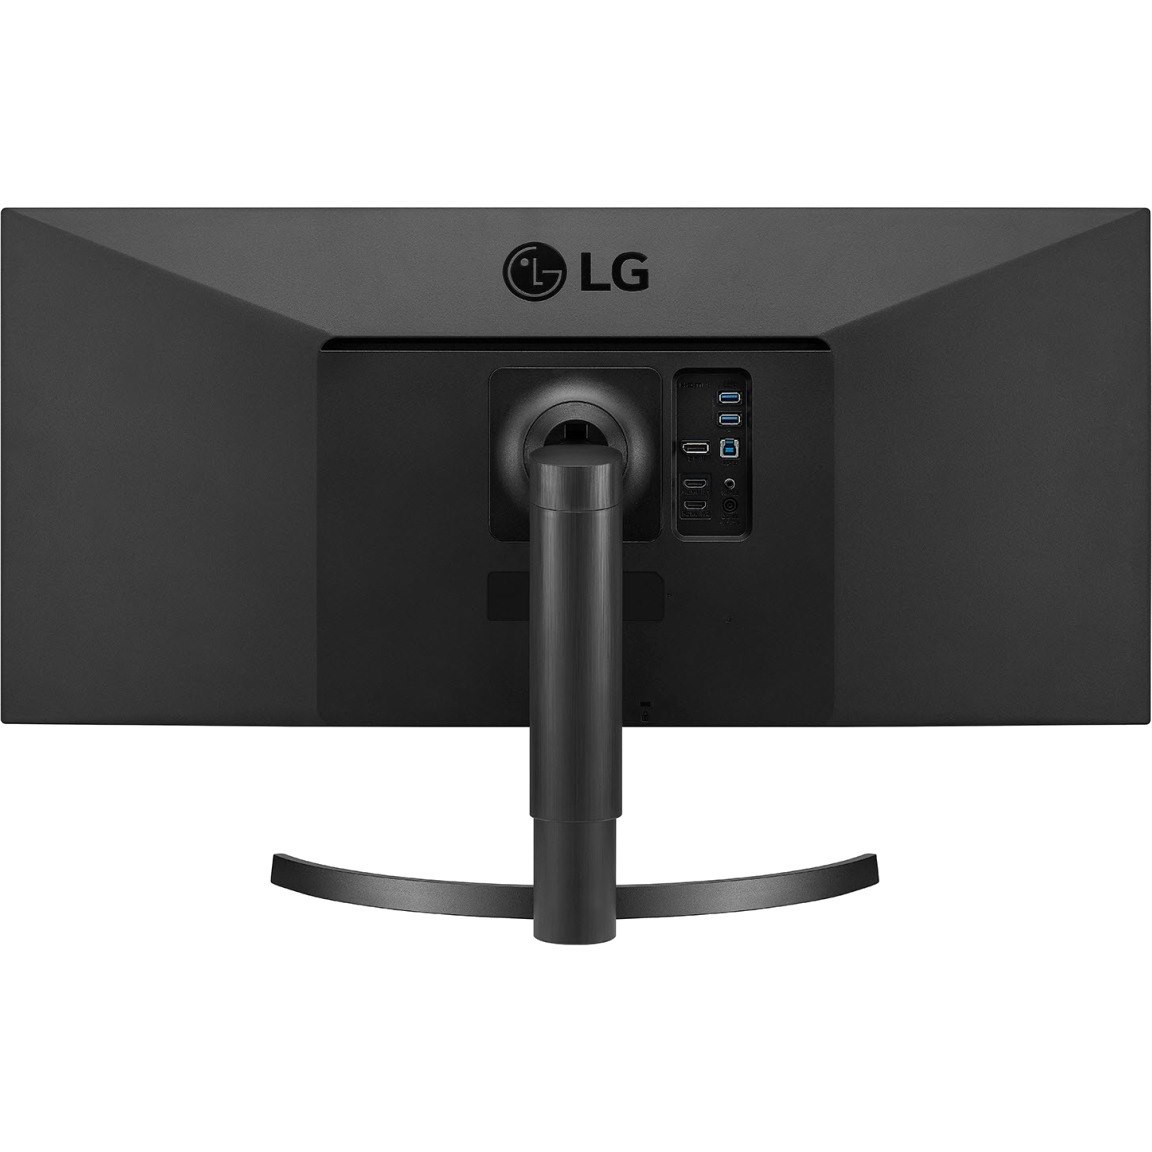 LG Ultrawide 34WN750 86.4 cm (34") UW-QHD LED Gaming LCD Monitor - 21:9 - Black